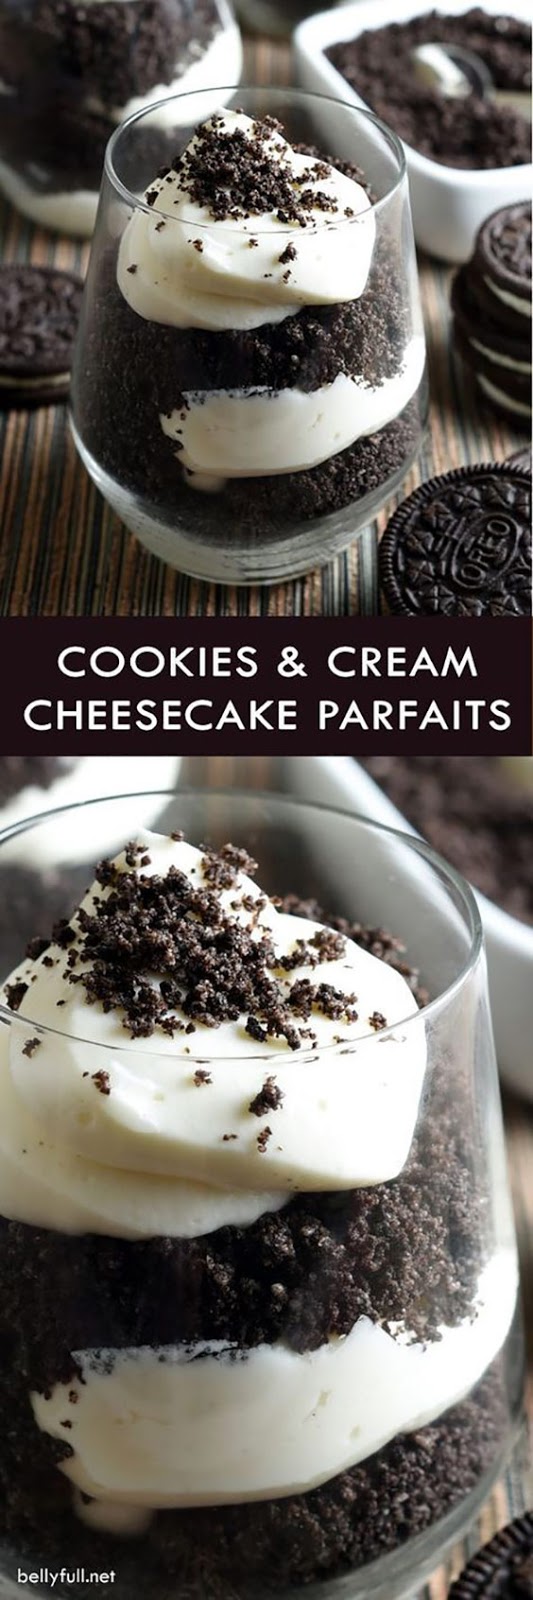 Cookies and Cream Cheesecake Parfaits